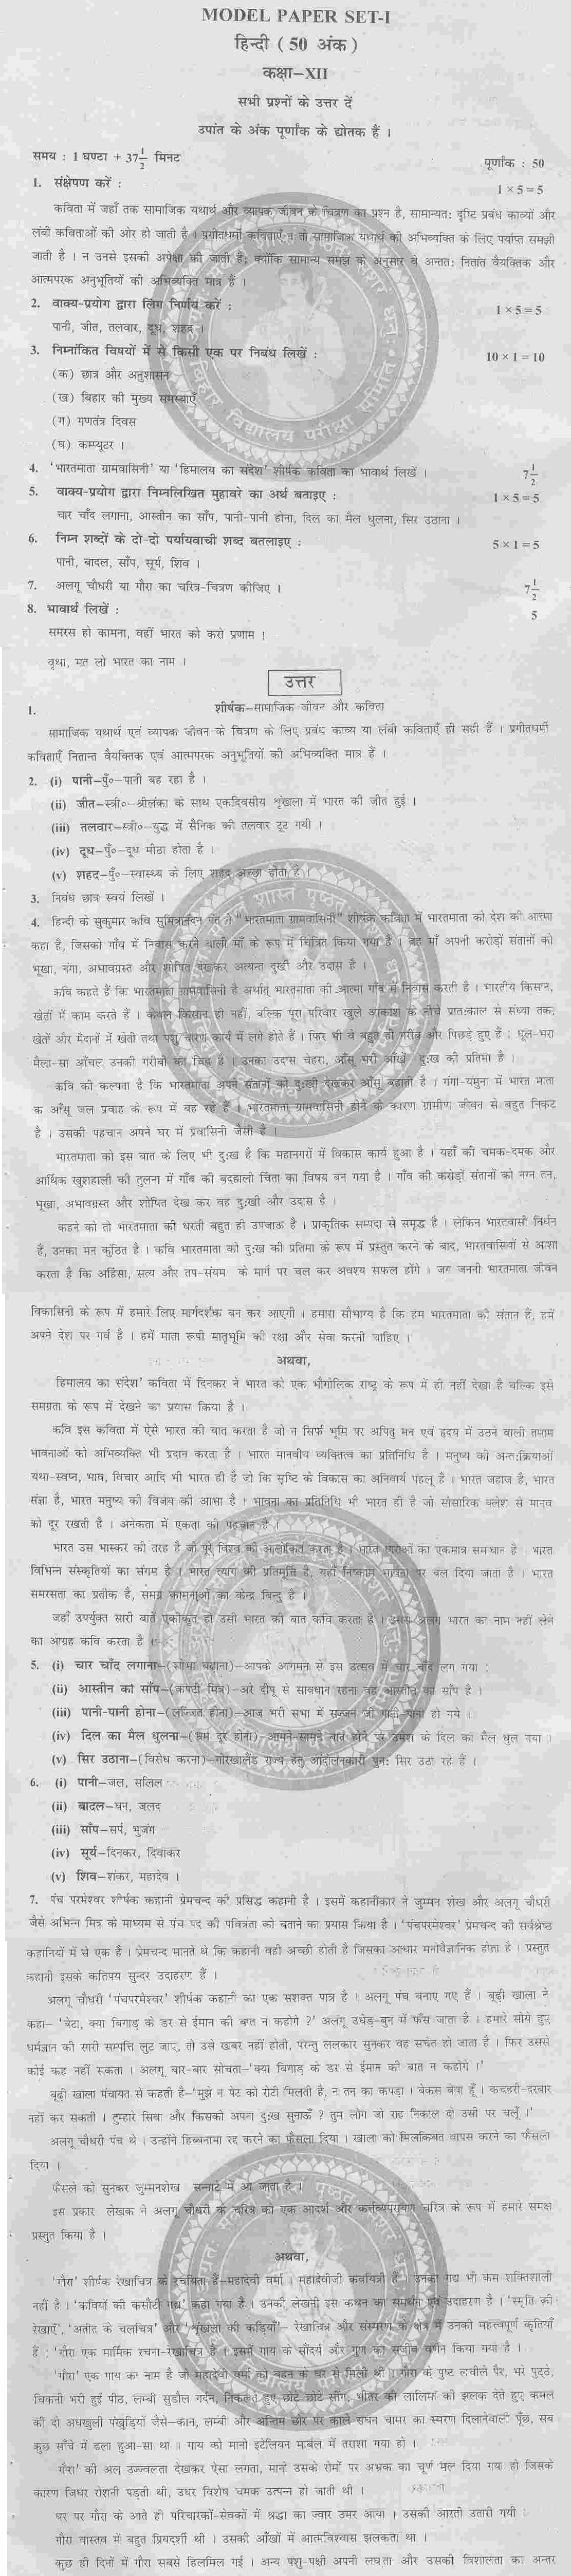 Bihar Board Class XII Humanities Model Question Papers - Hindi